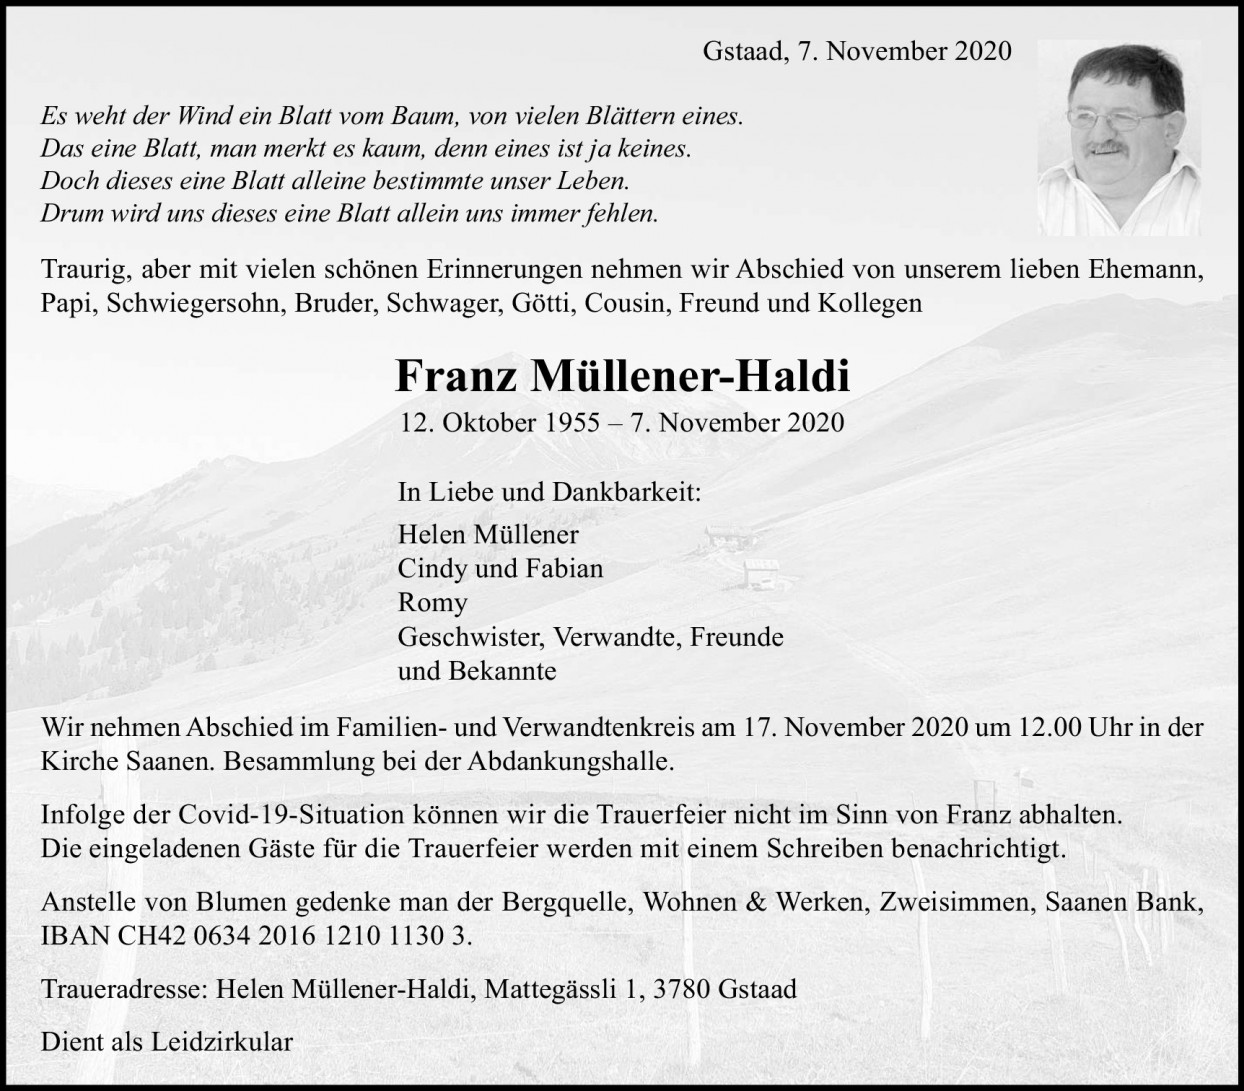 Franz Müllener-Haldi